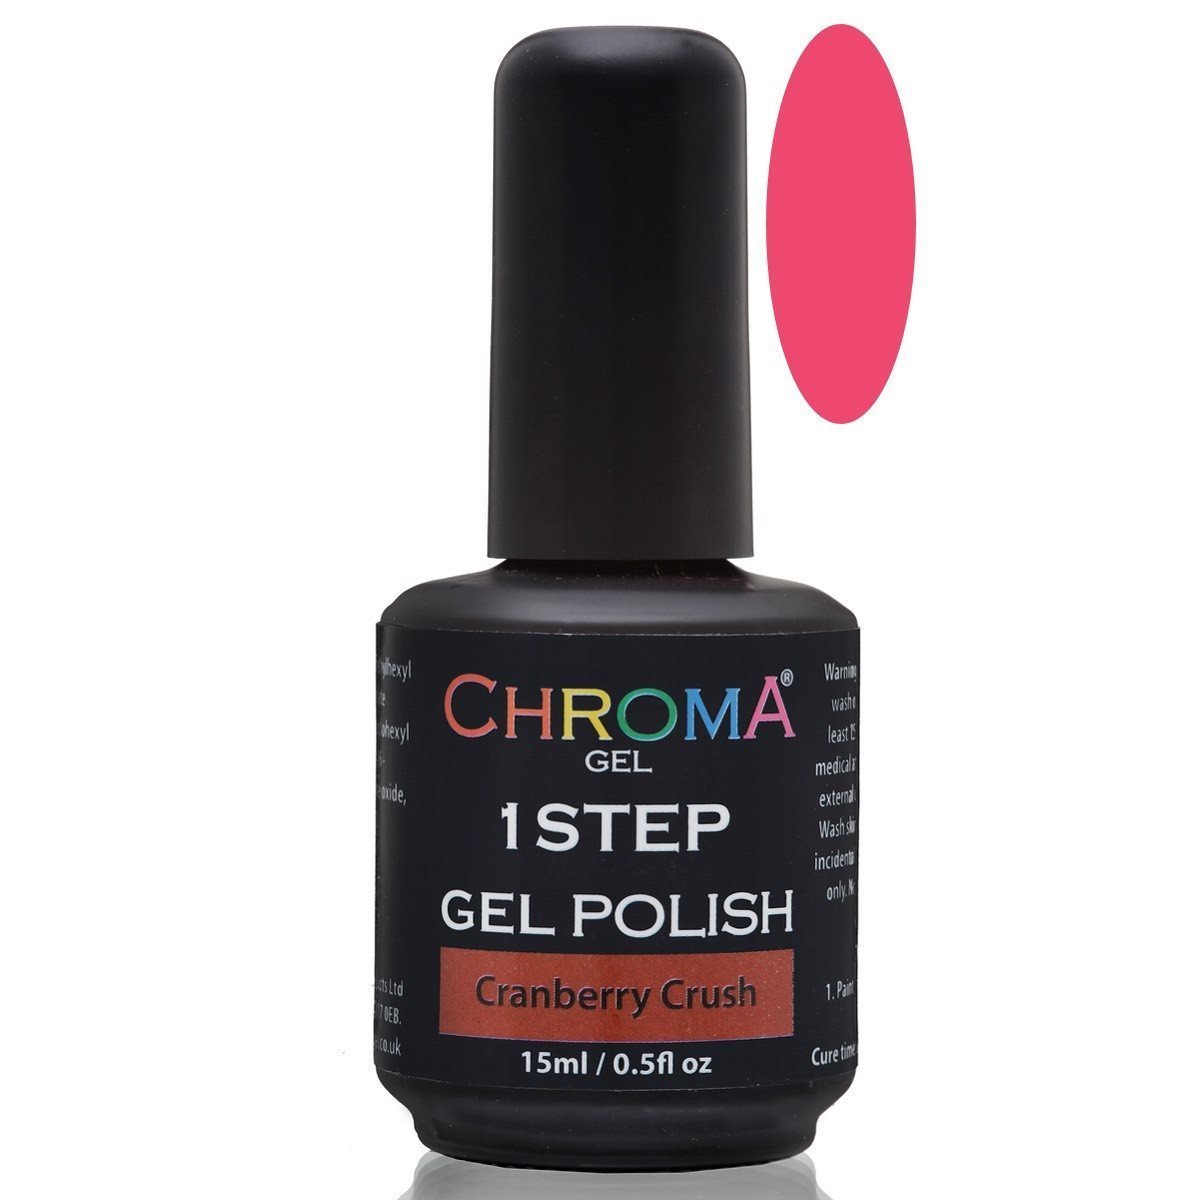 Chroma Gel 1 Step Gel Polish Cranberry Crush No.48 - beautyhair.co.ukChroma Gel